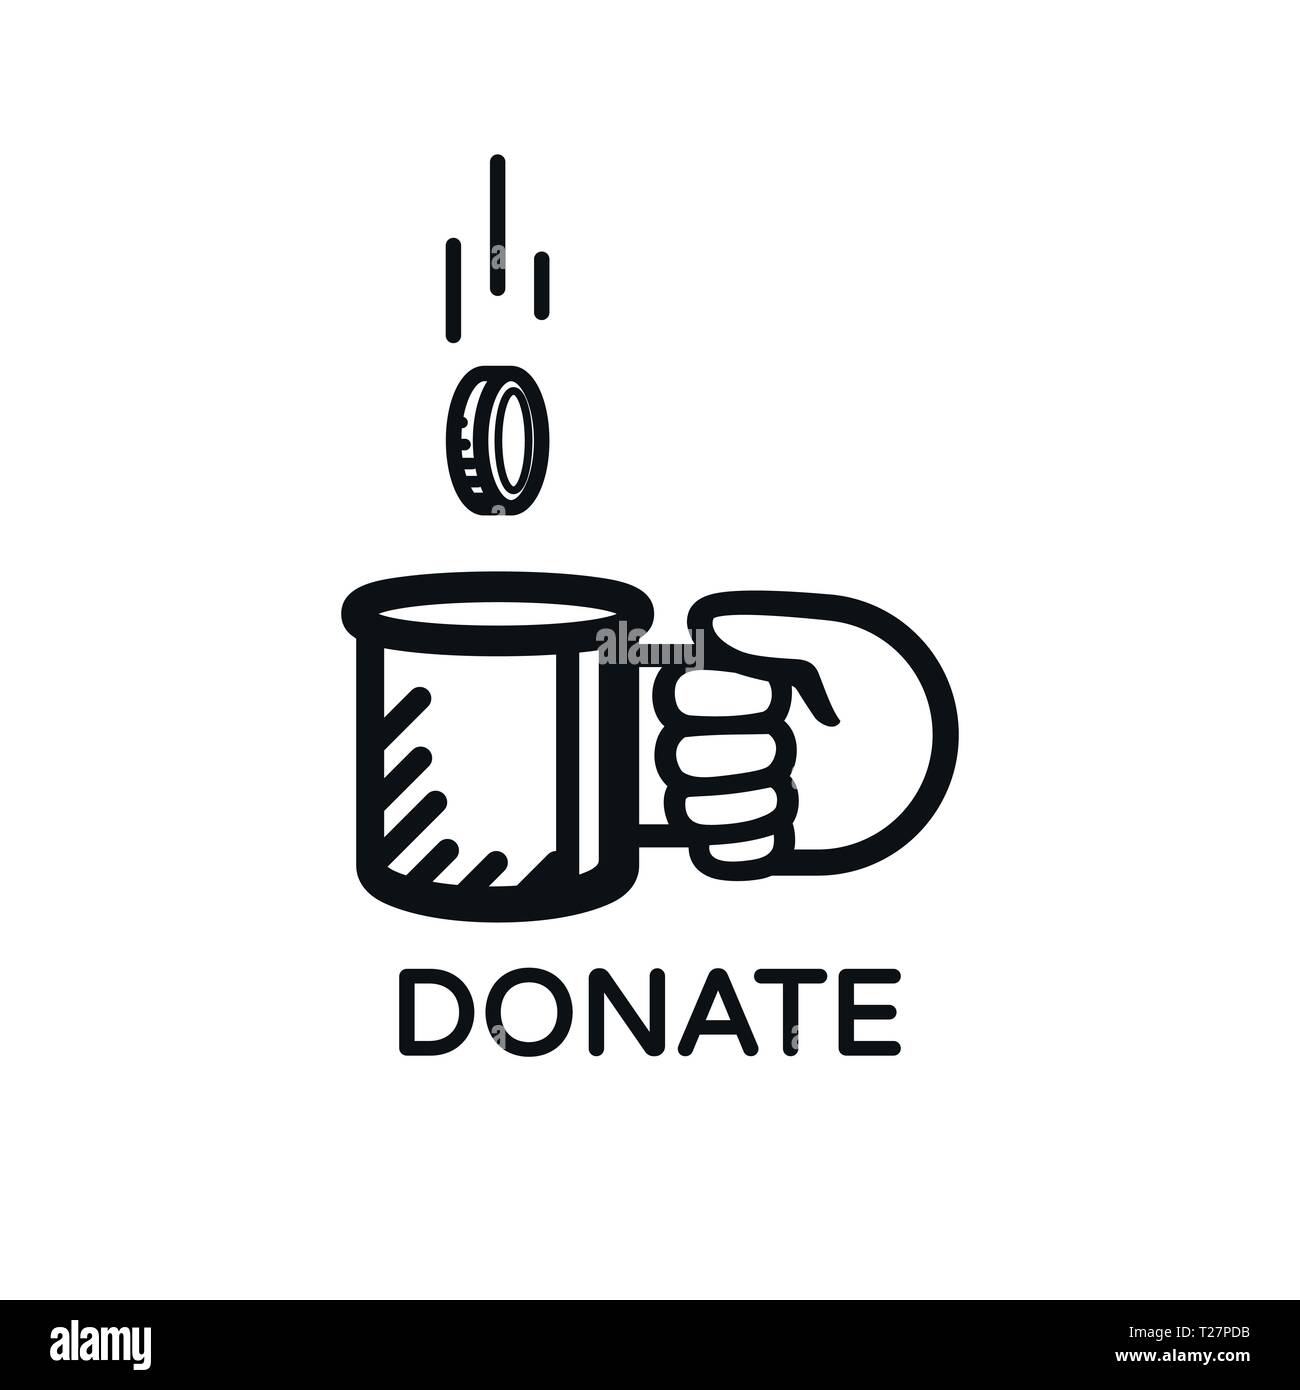 Donate coin vector logo. Donate and help. Charity, donation concept. Coin falls into the beggar's mug. Stock Vector